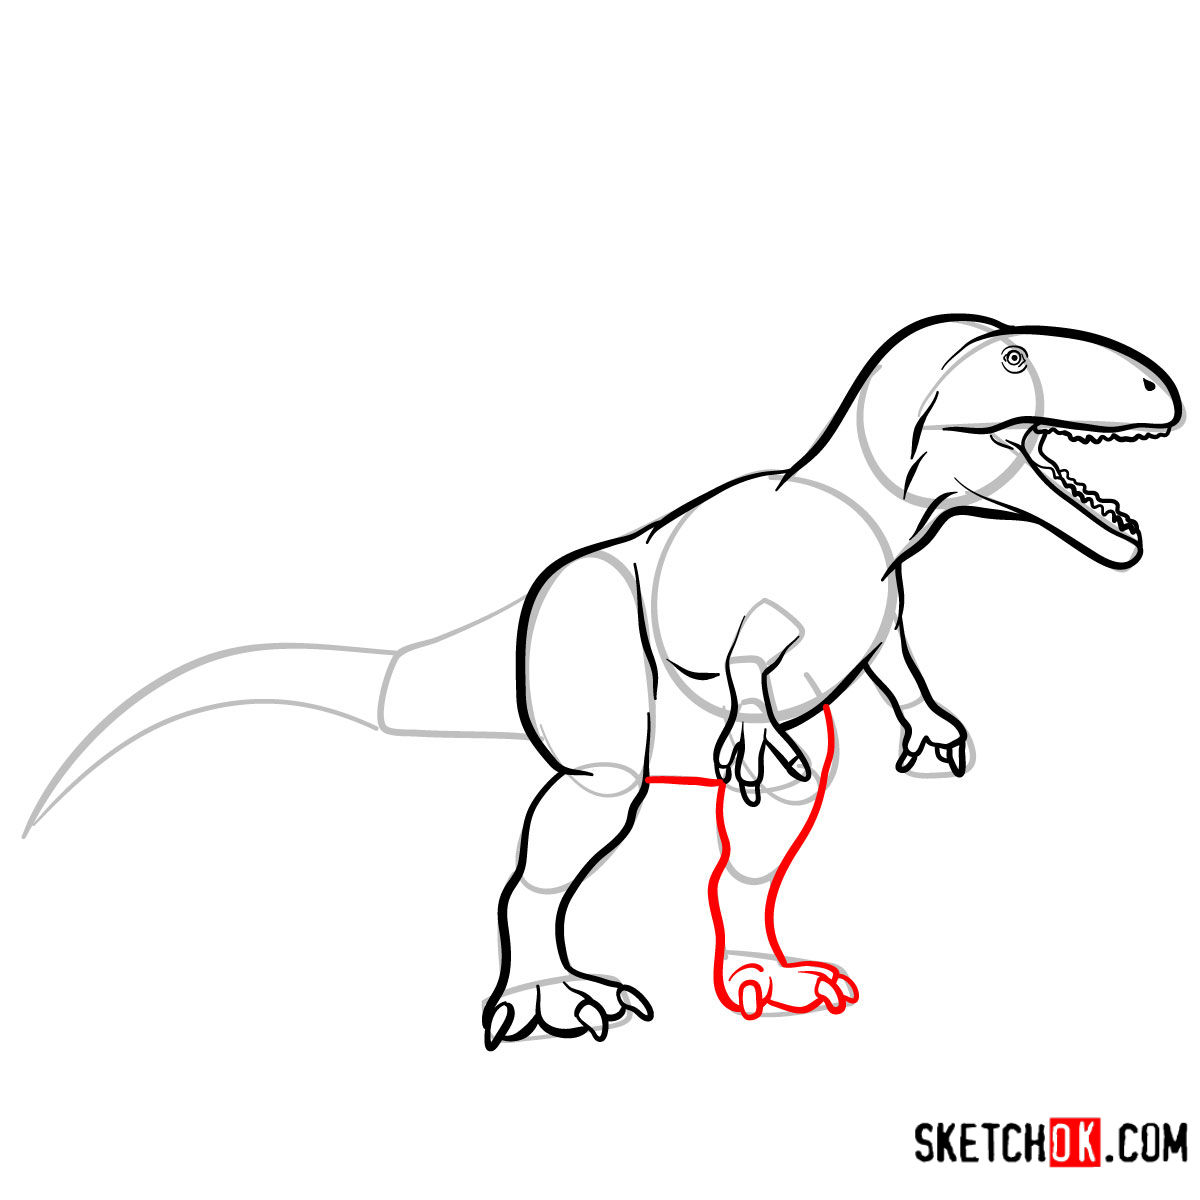 How to draw a Carcharodontosaurus | Extinct Animals - step 09